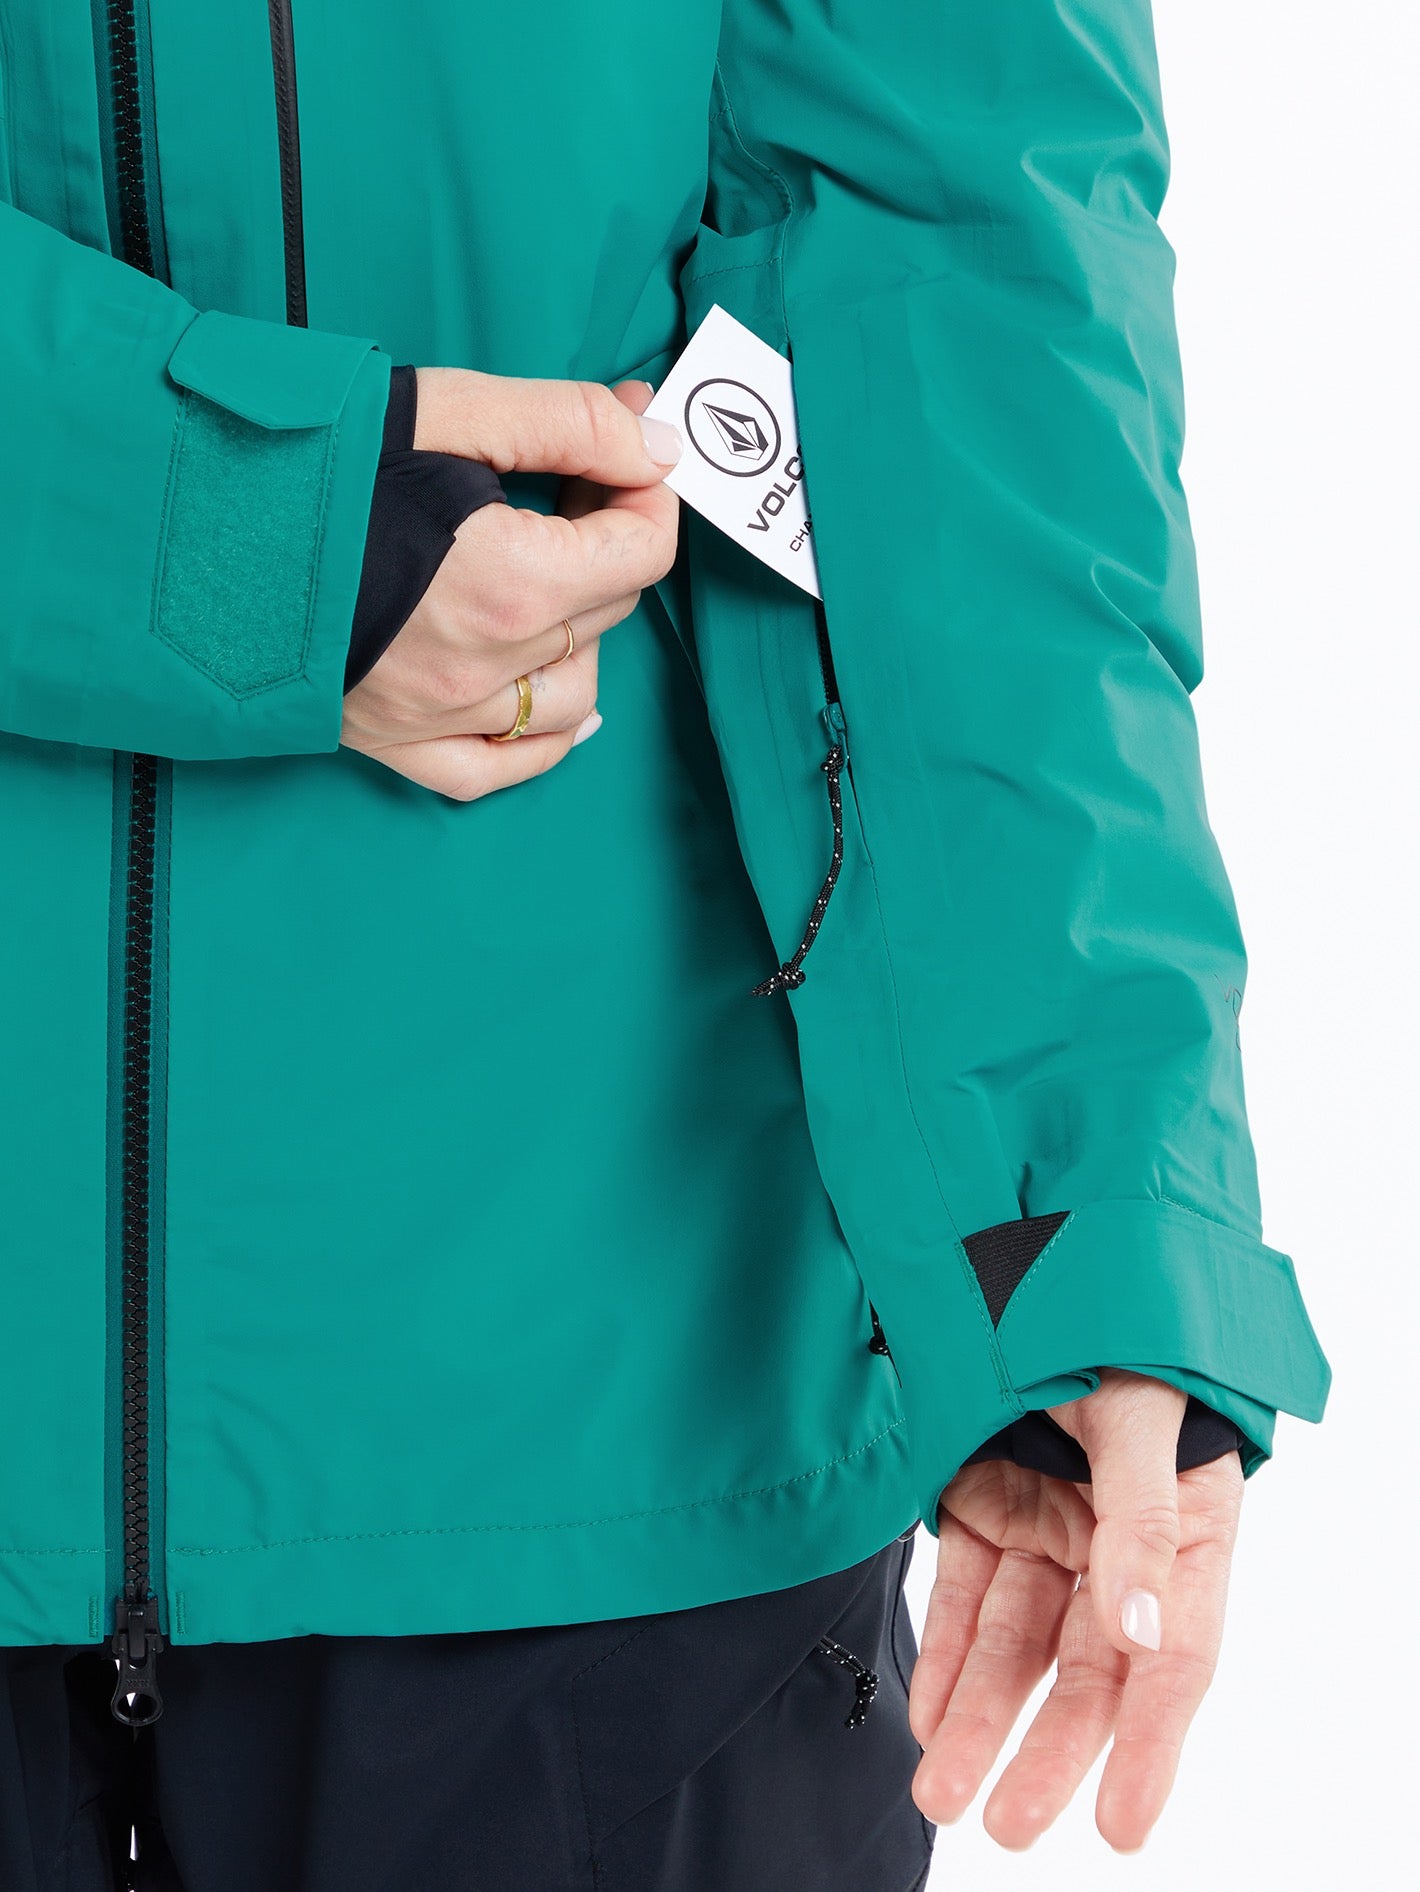 Womens Koa Tds Infrared Gore-Tex Jacket - Vibrant Green – Volcom 